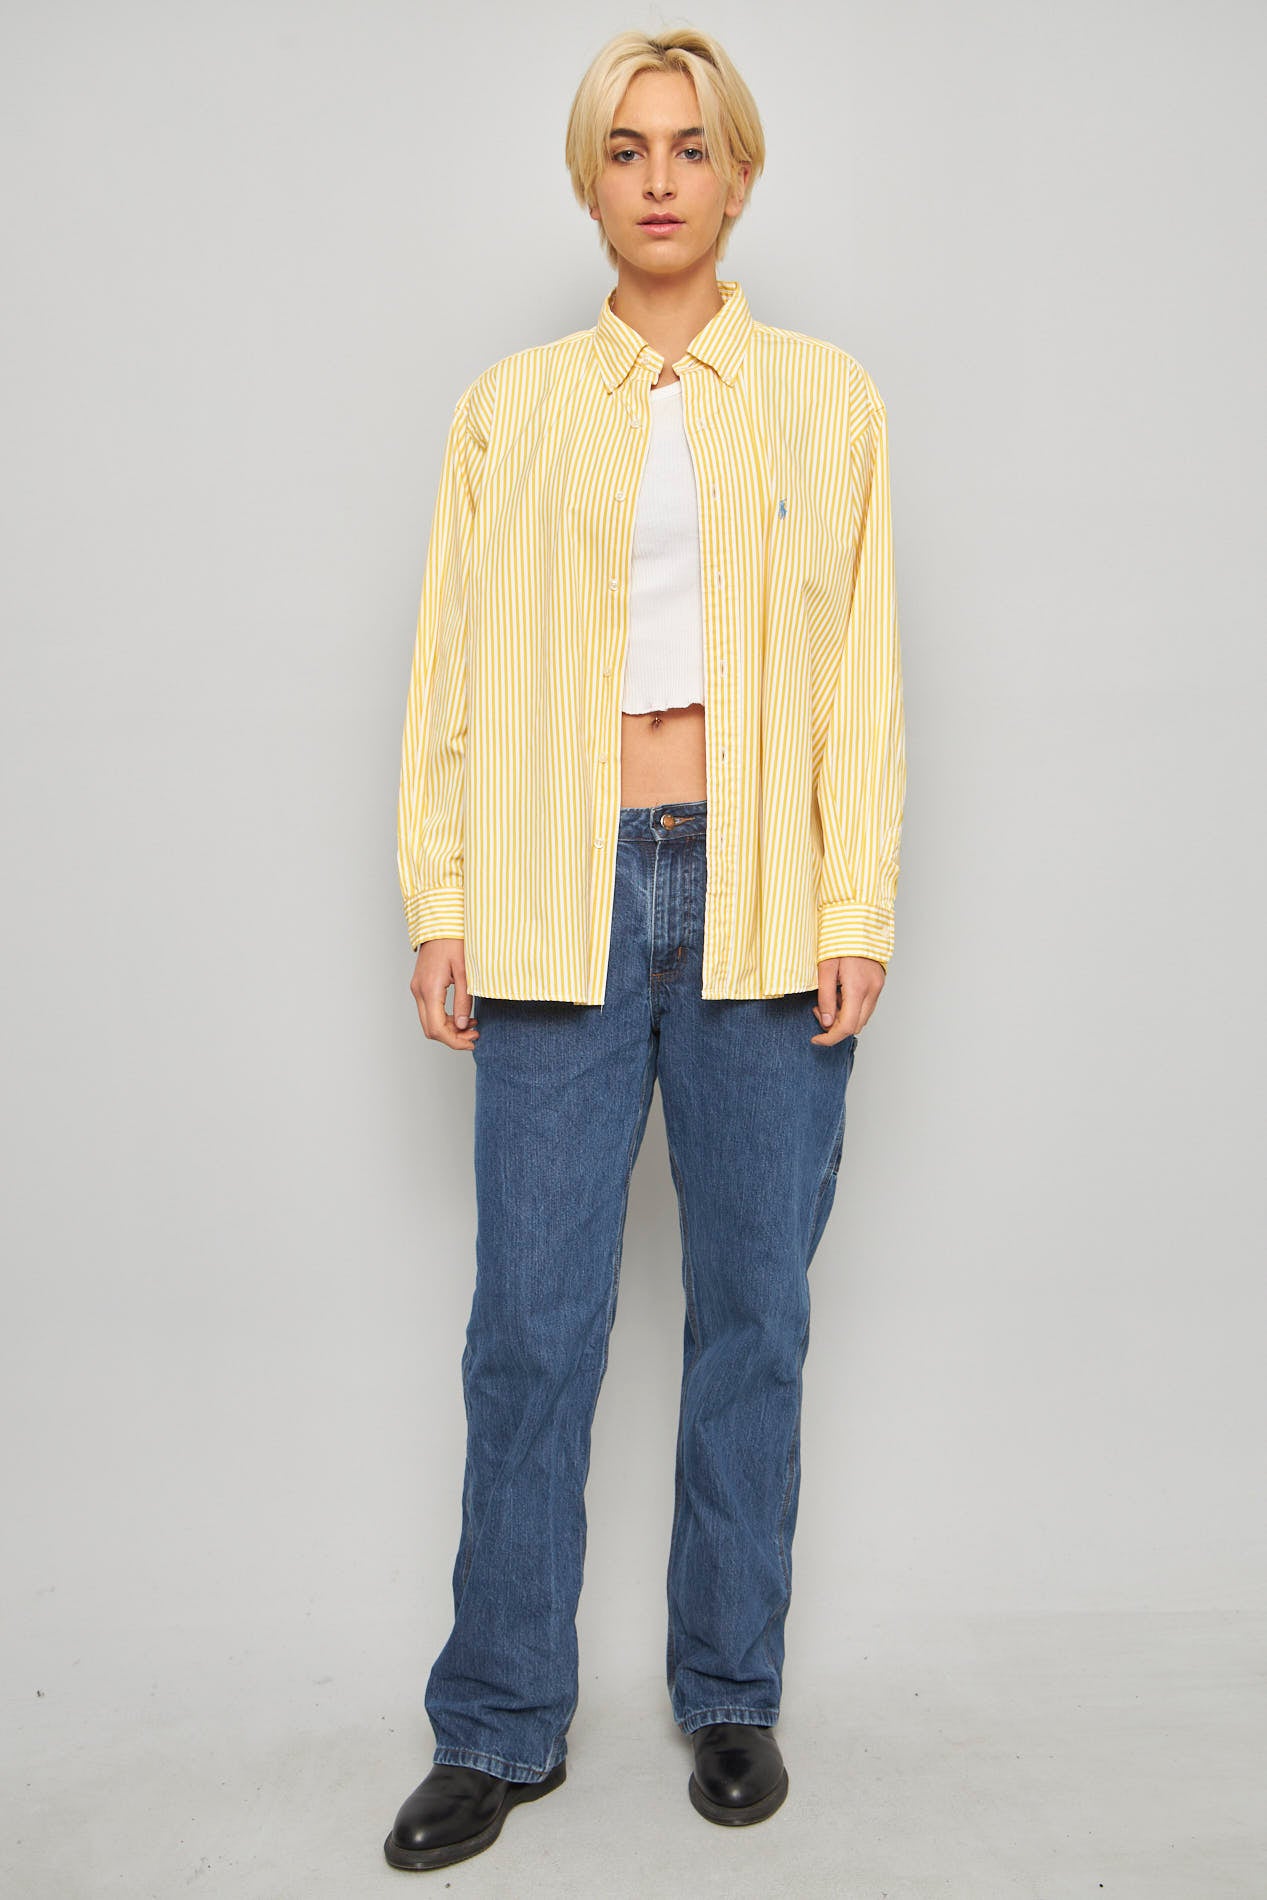 Blusa casual  amarillo ralph lauren talla Xl 413